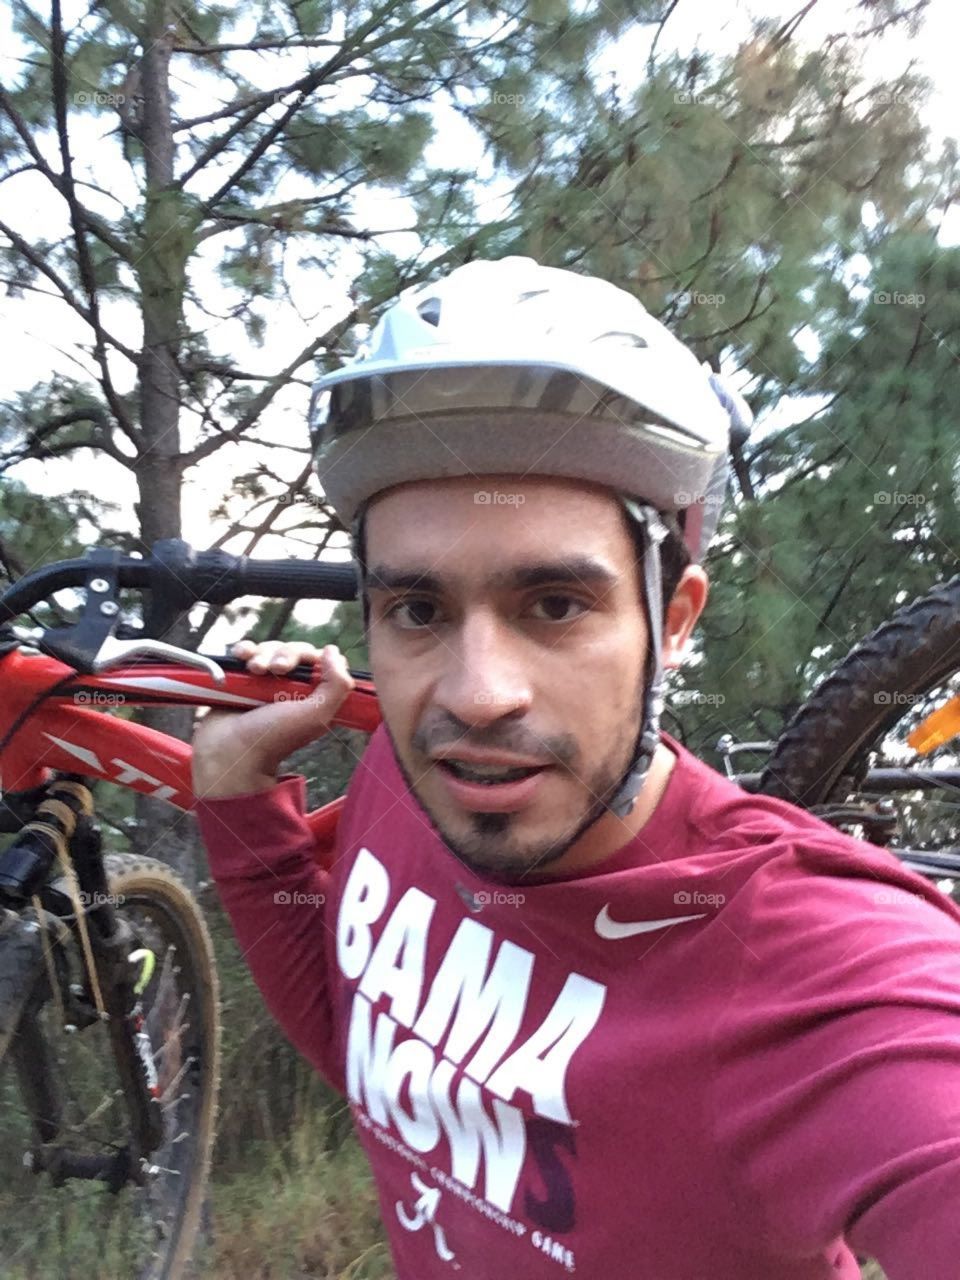 bike ride